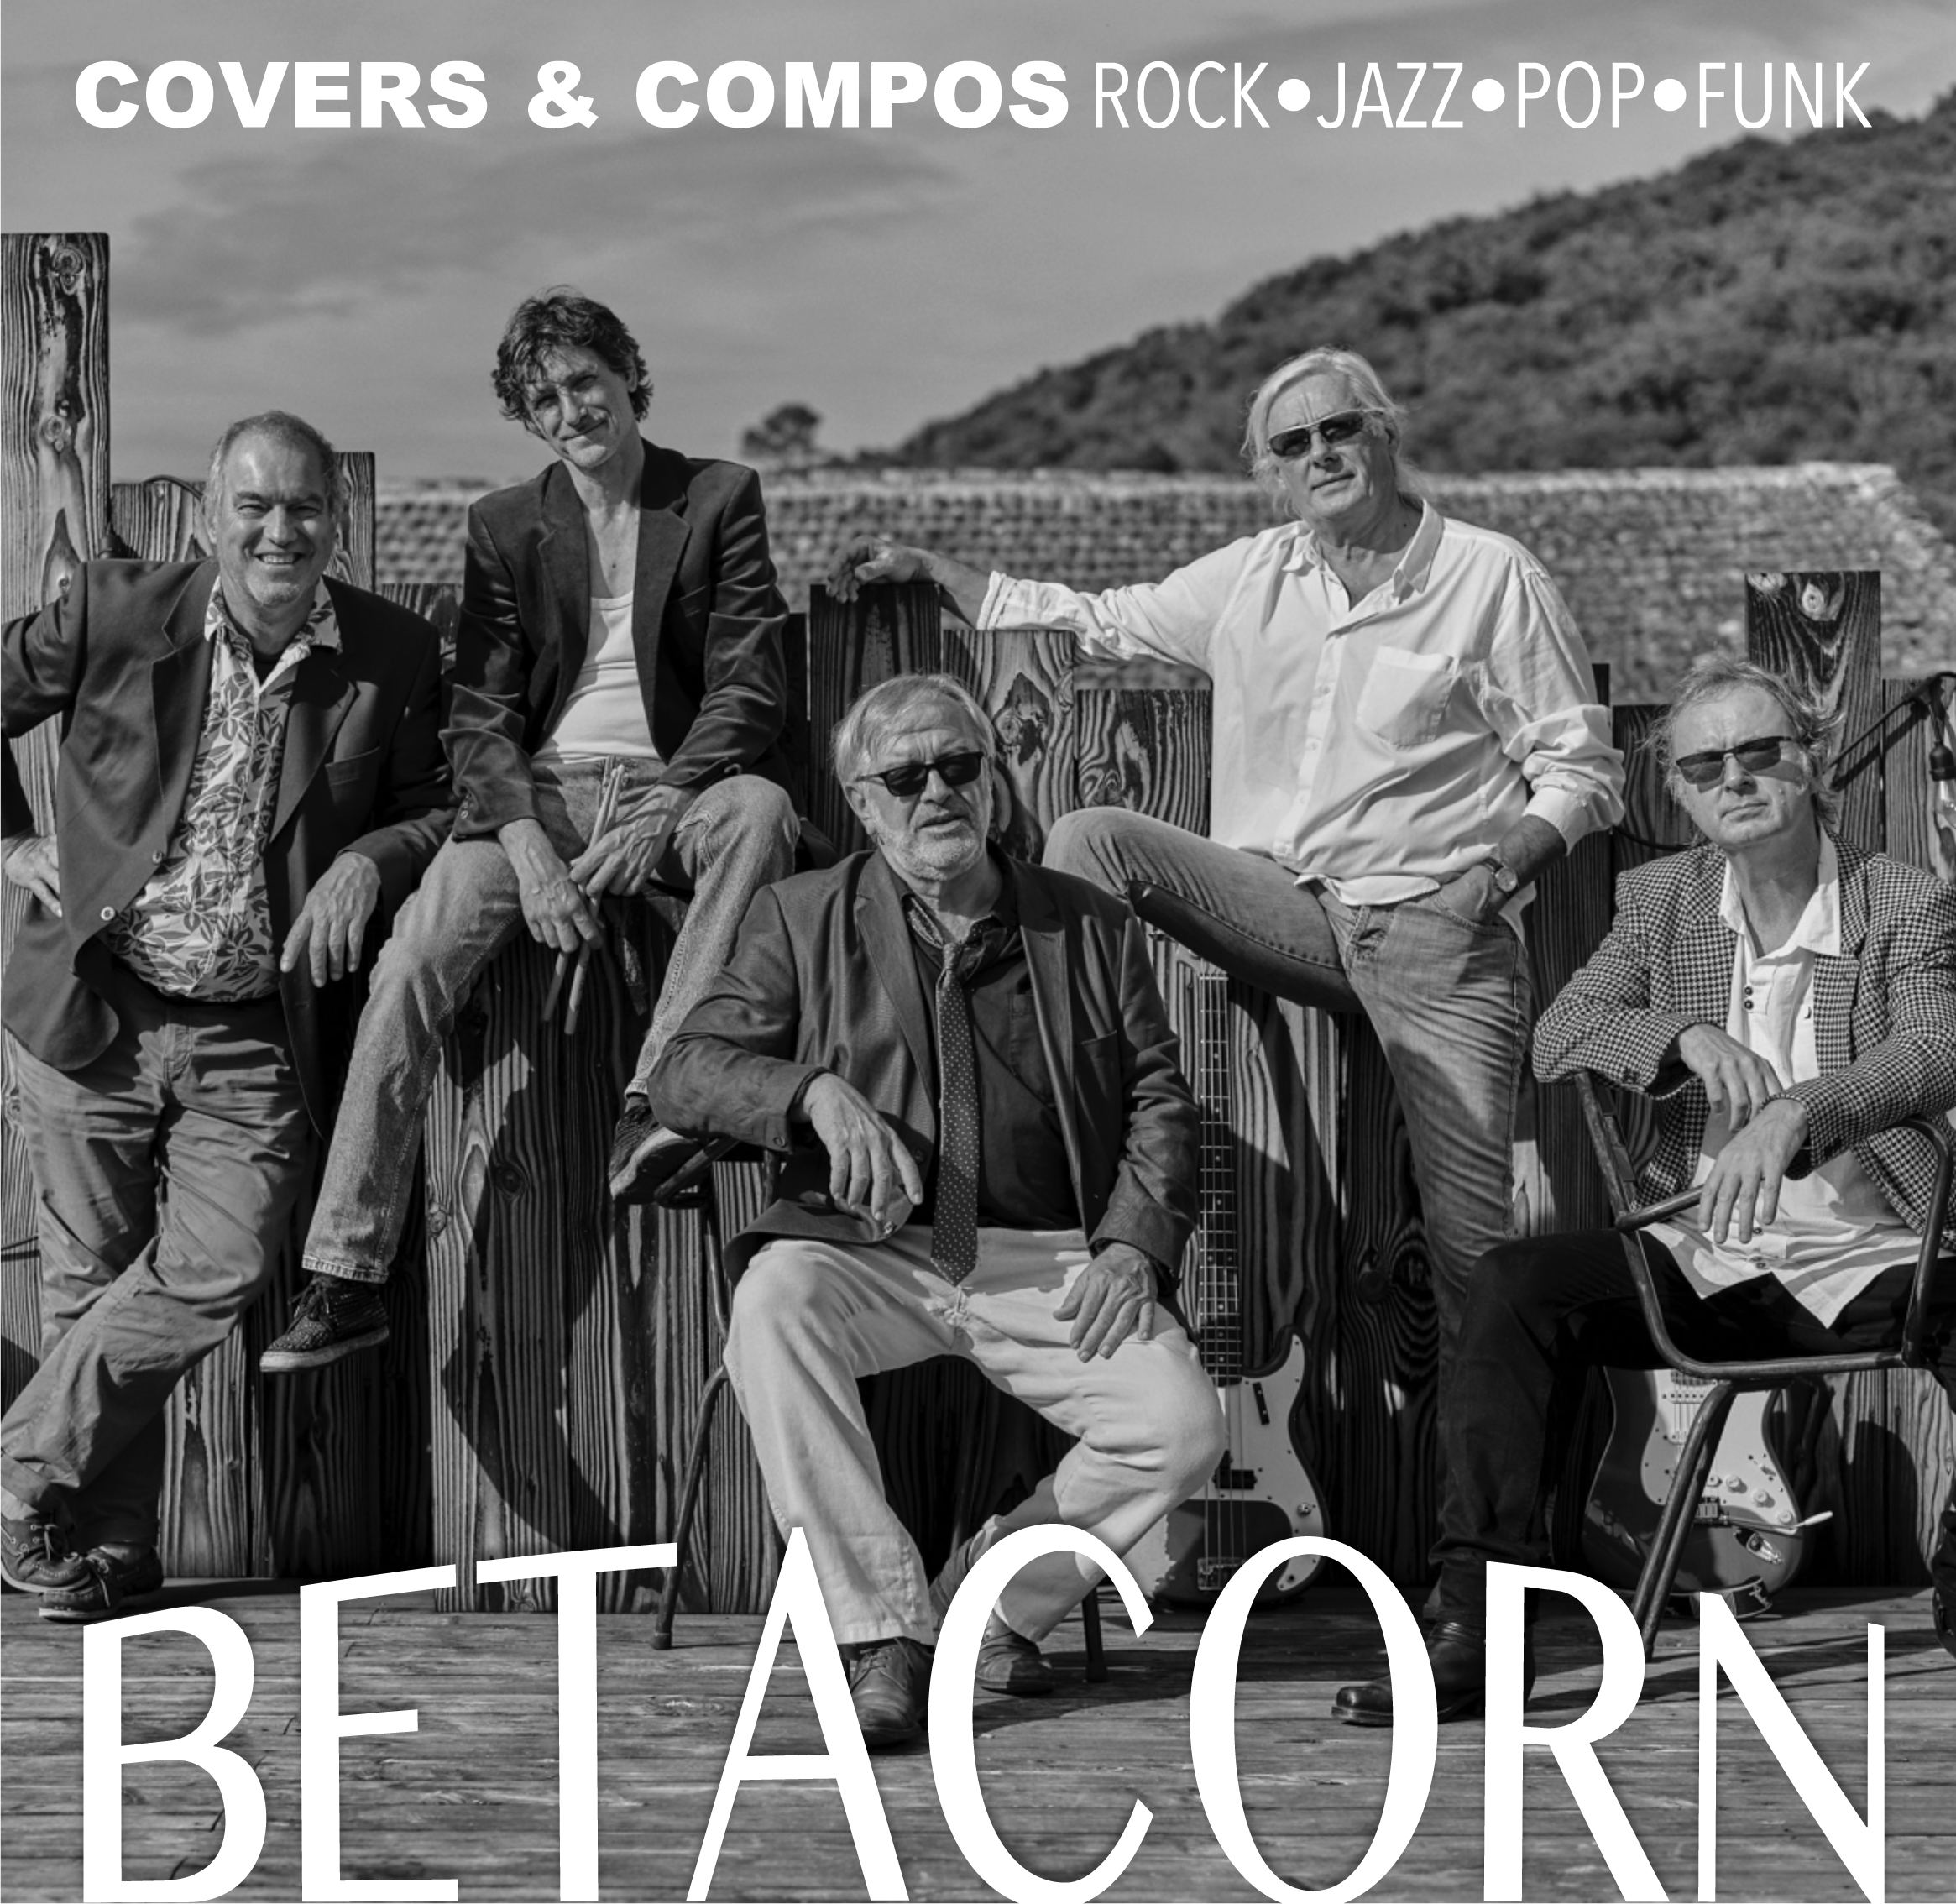 Le groupe Betacorn